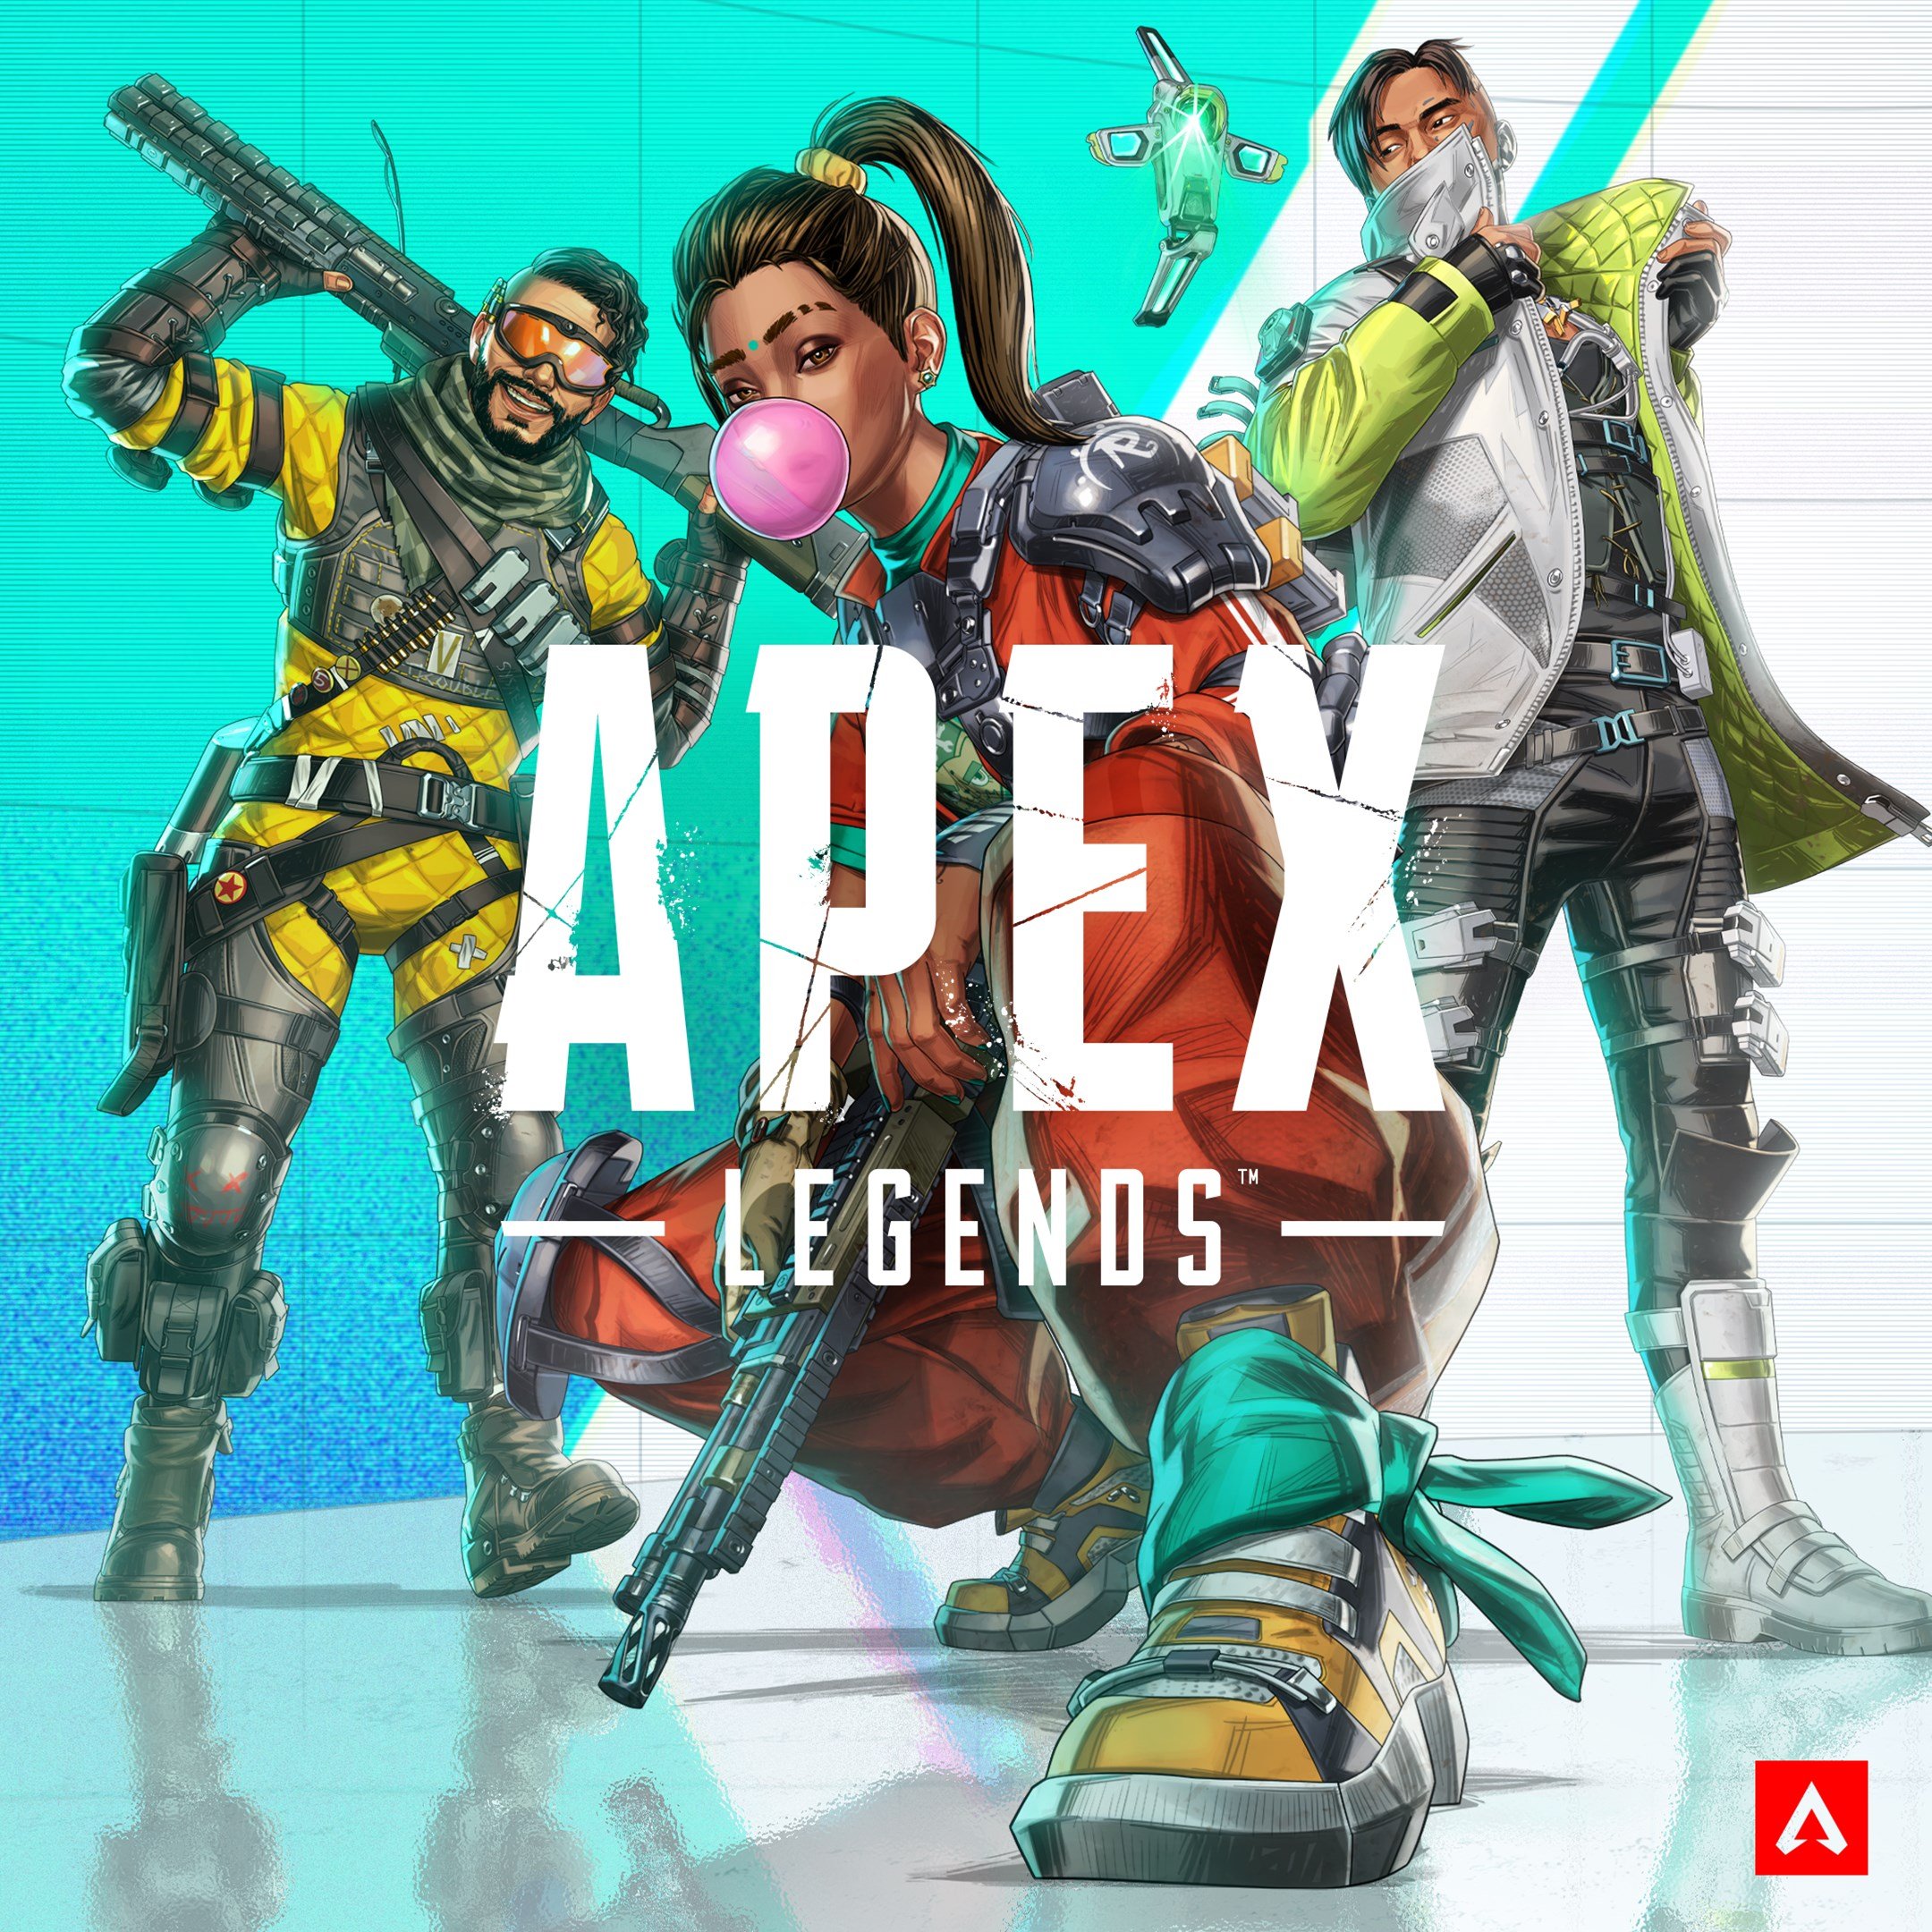 Boxart for Apex Legends™